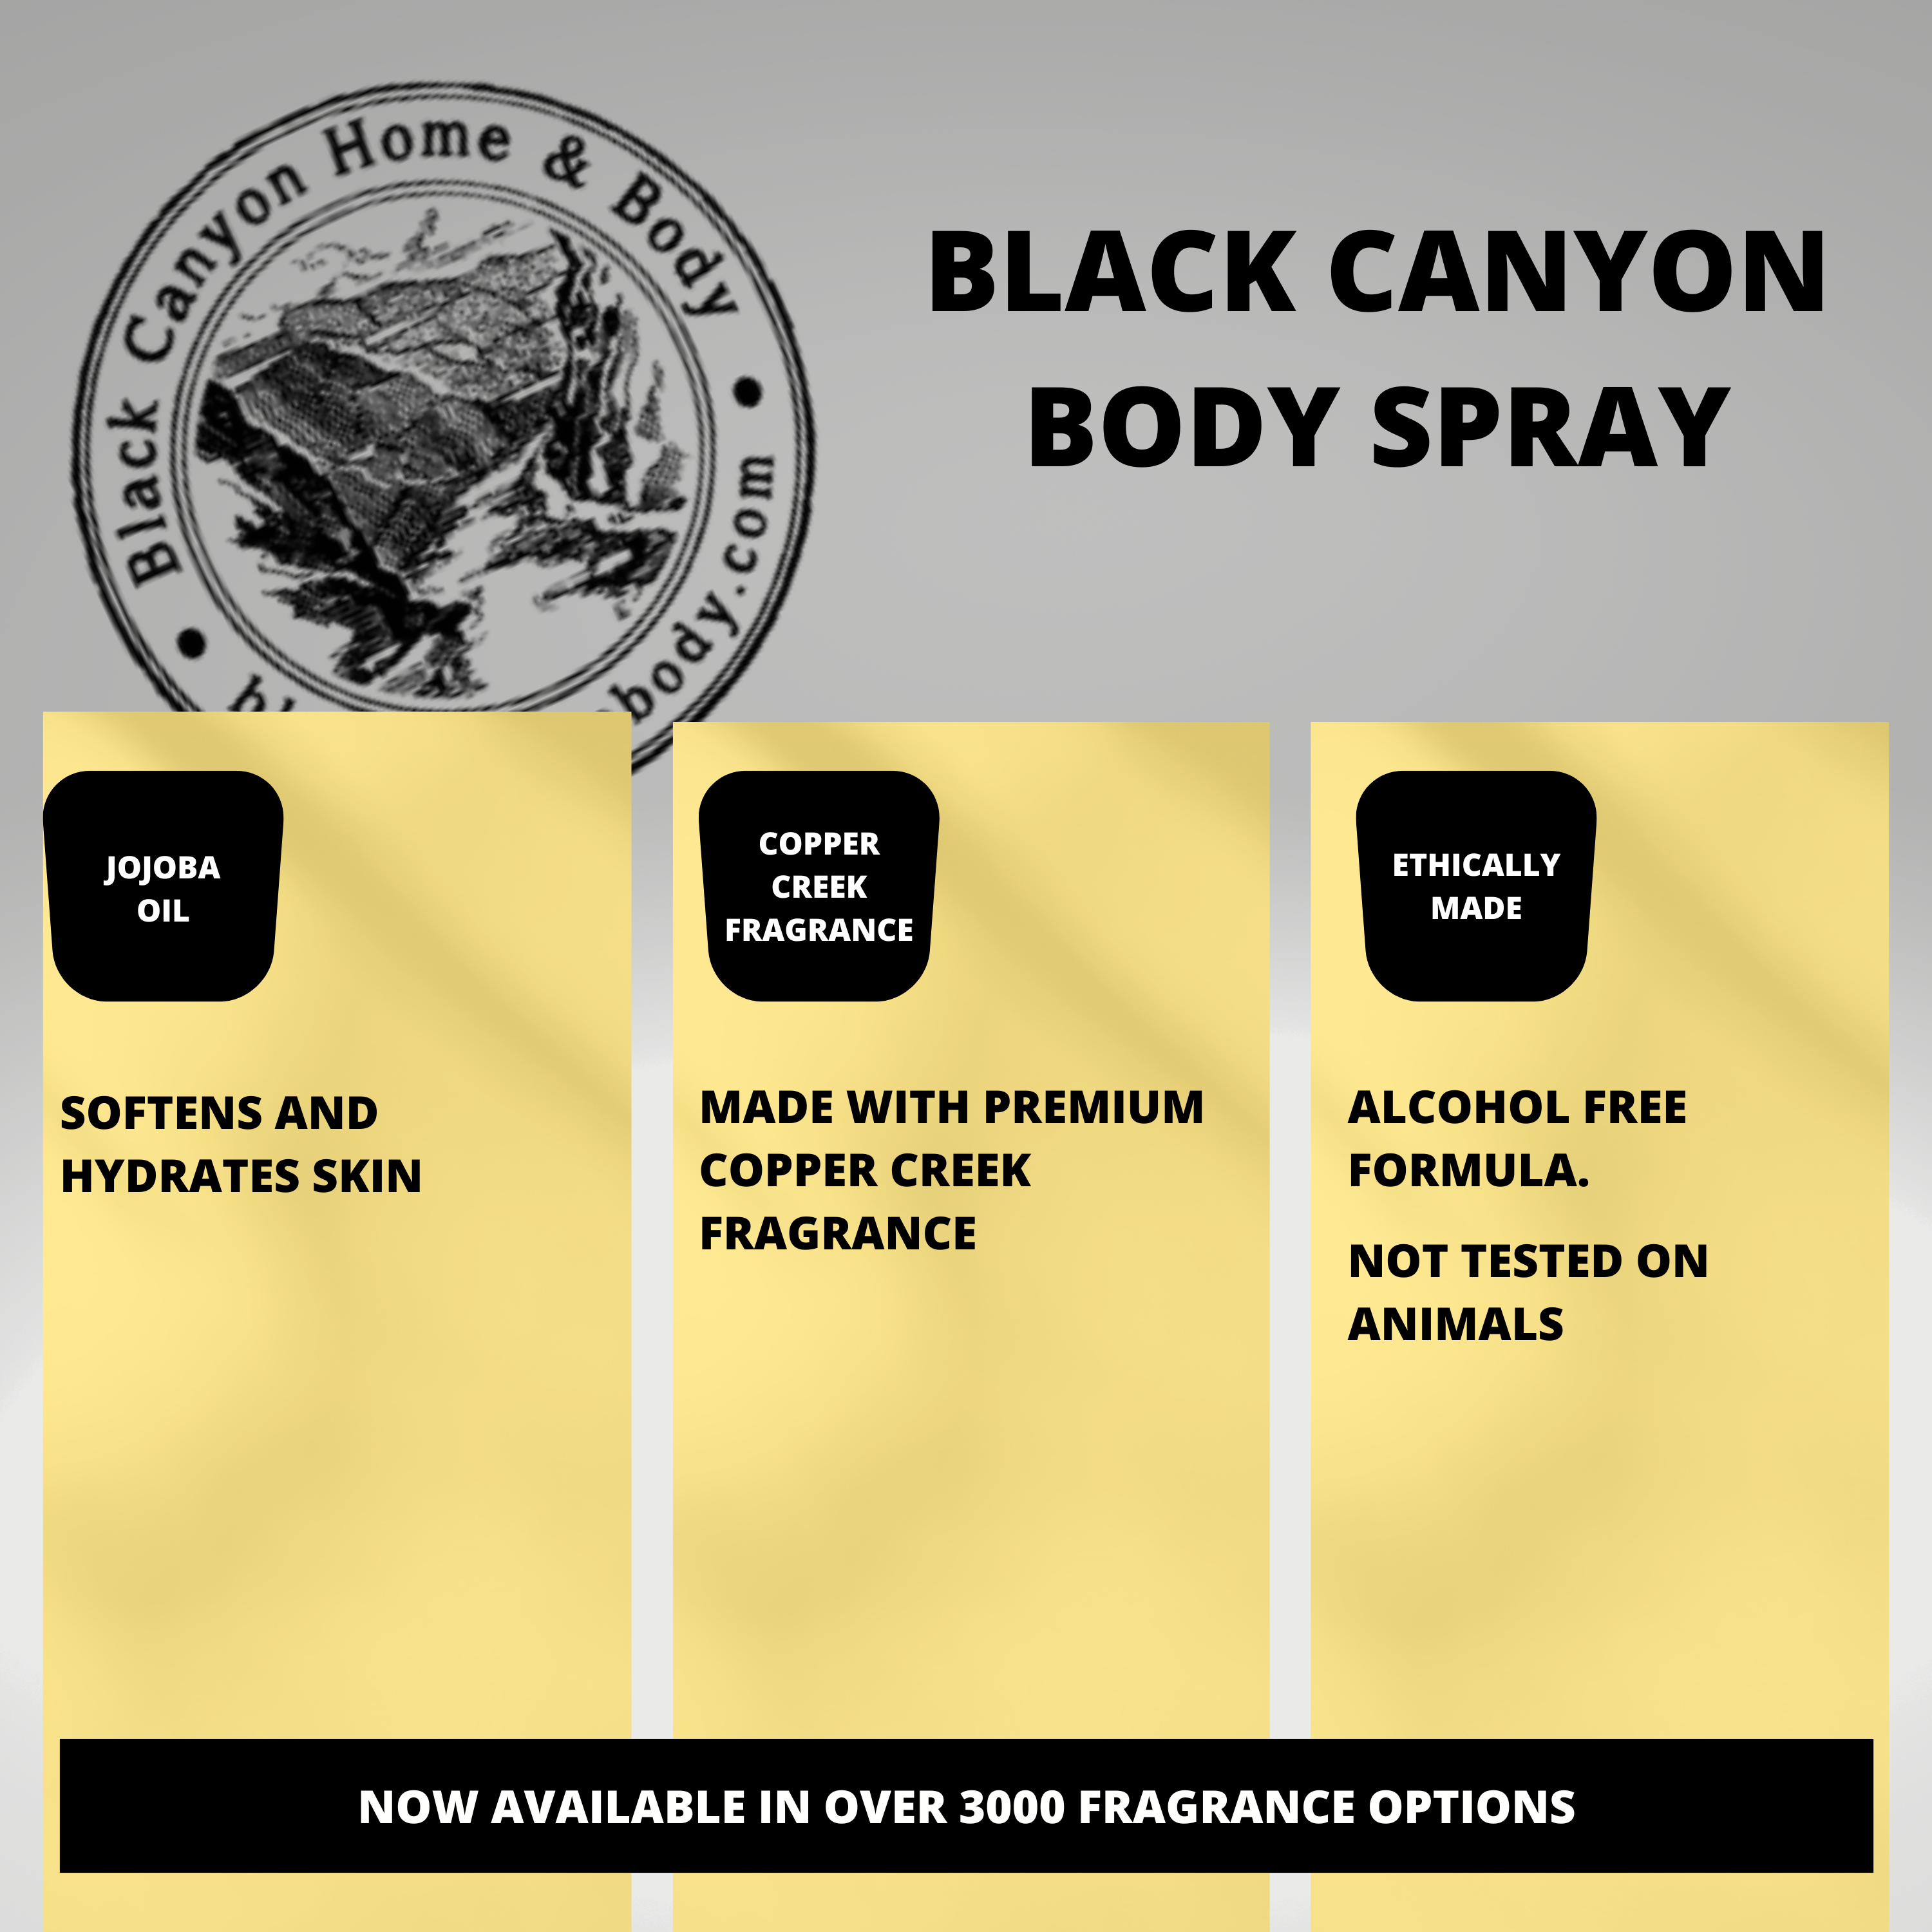 Black Canyon Night Blooming Jasmine Scented Body Spray